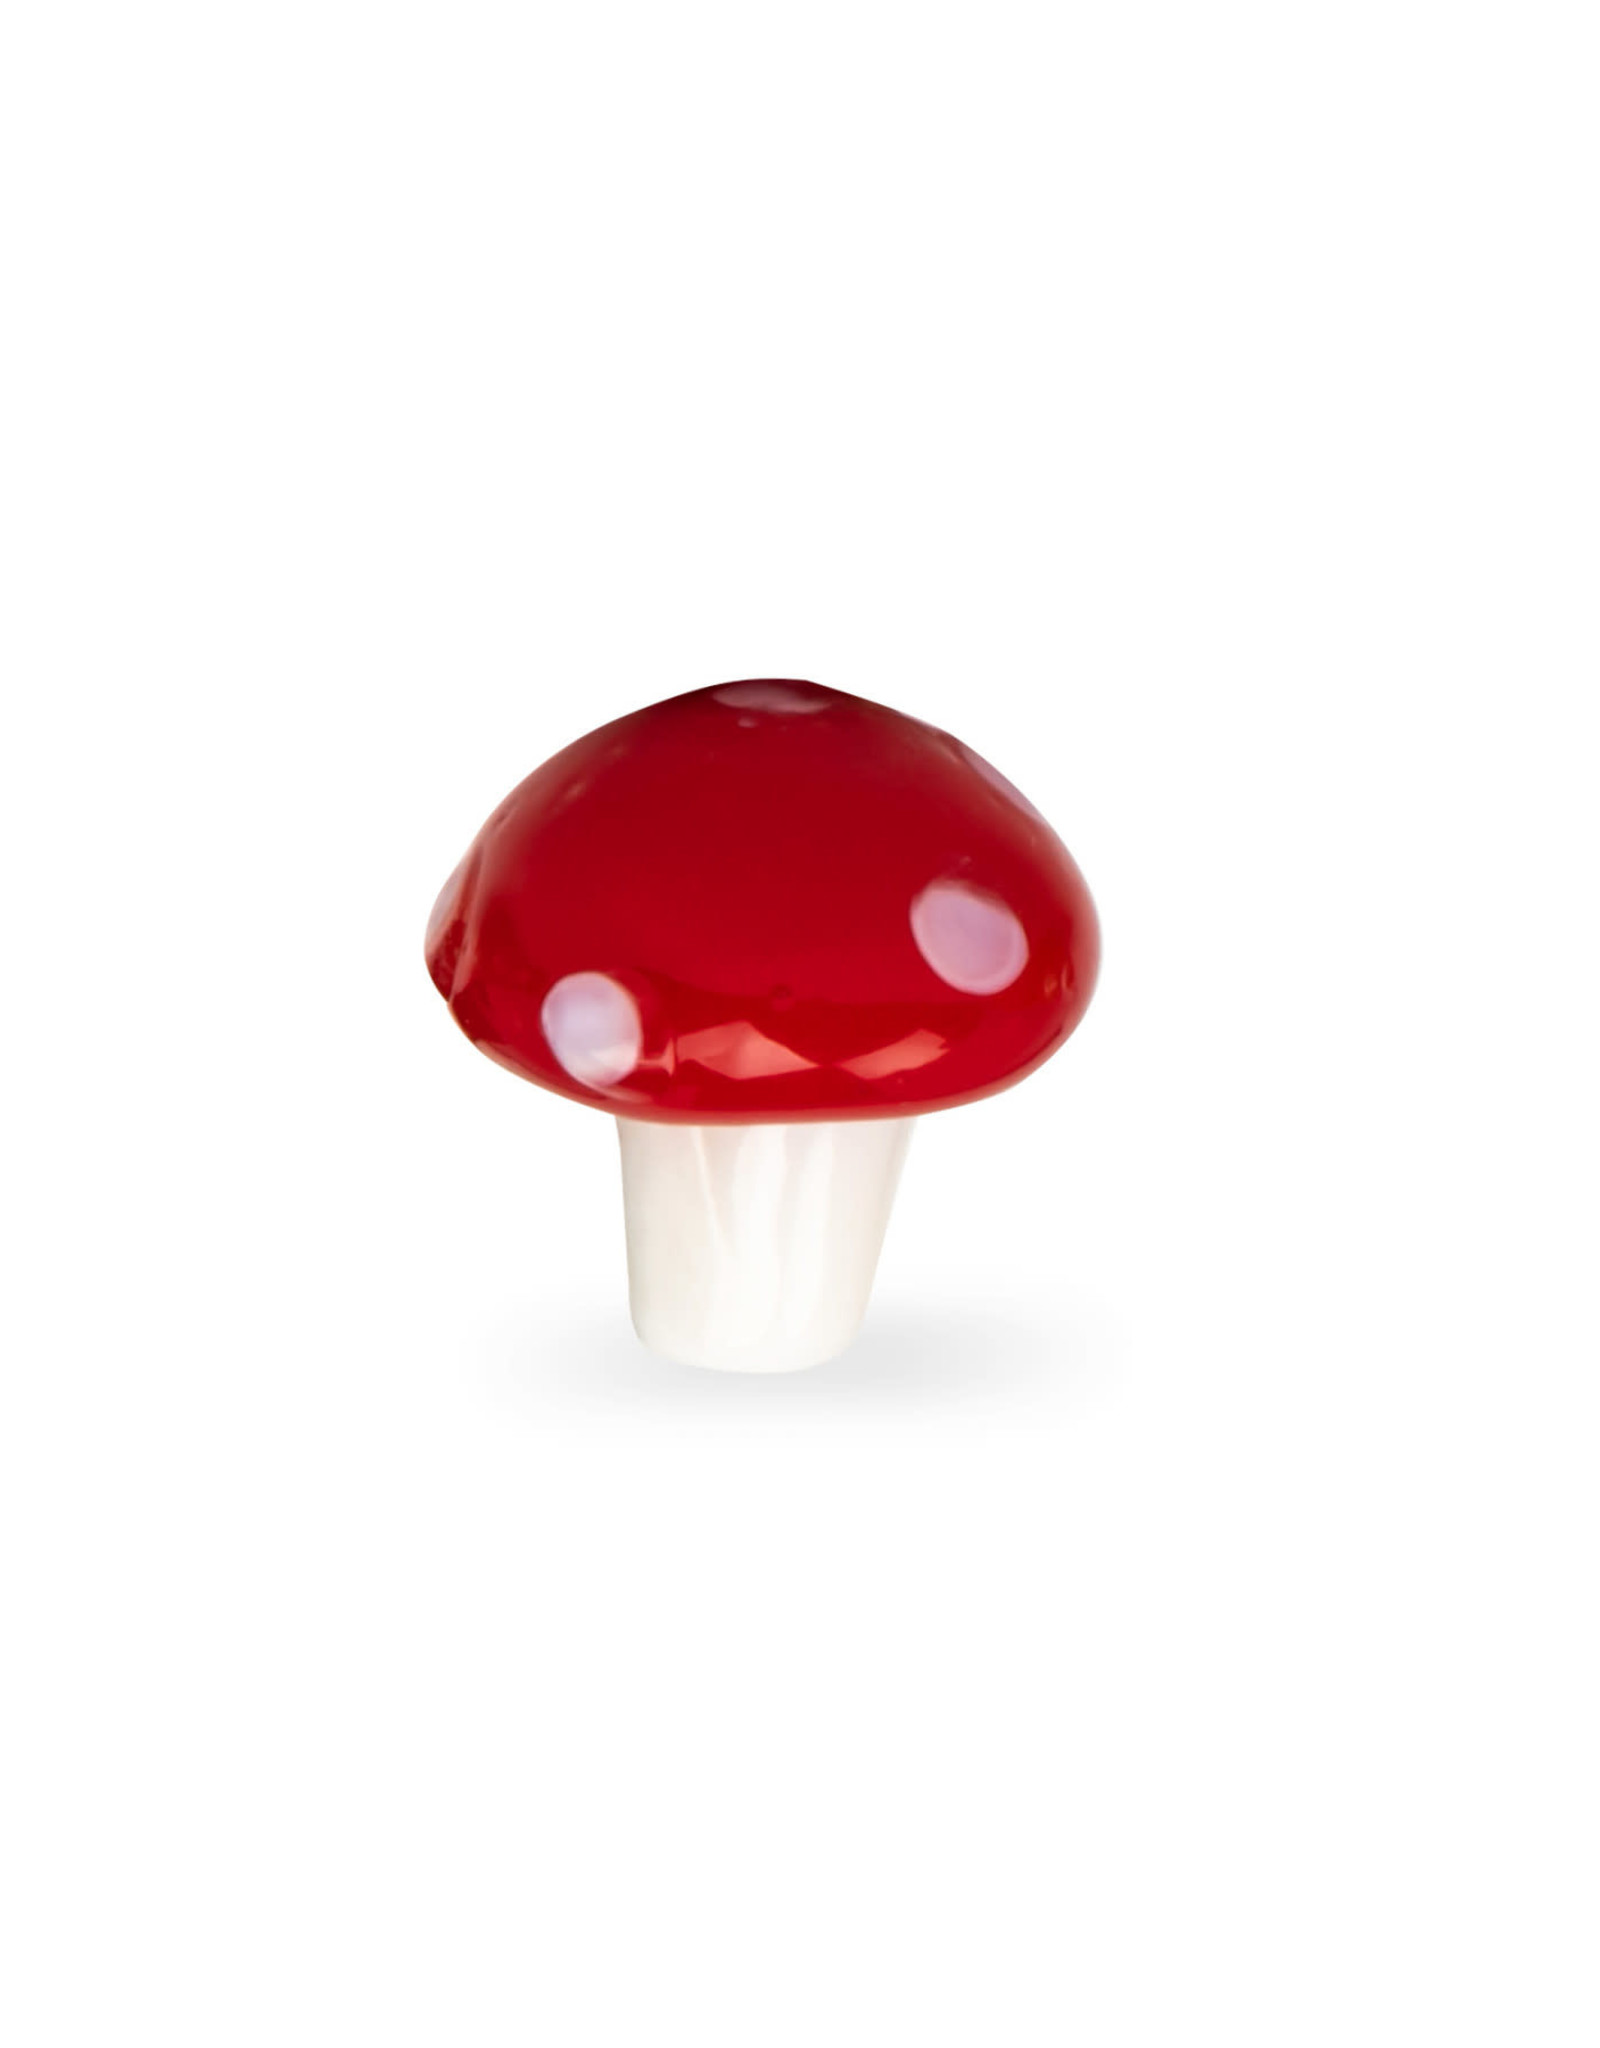 GEAR Premium Mushroom Terp Pearls by GEAR Premium (Sold Individually)